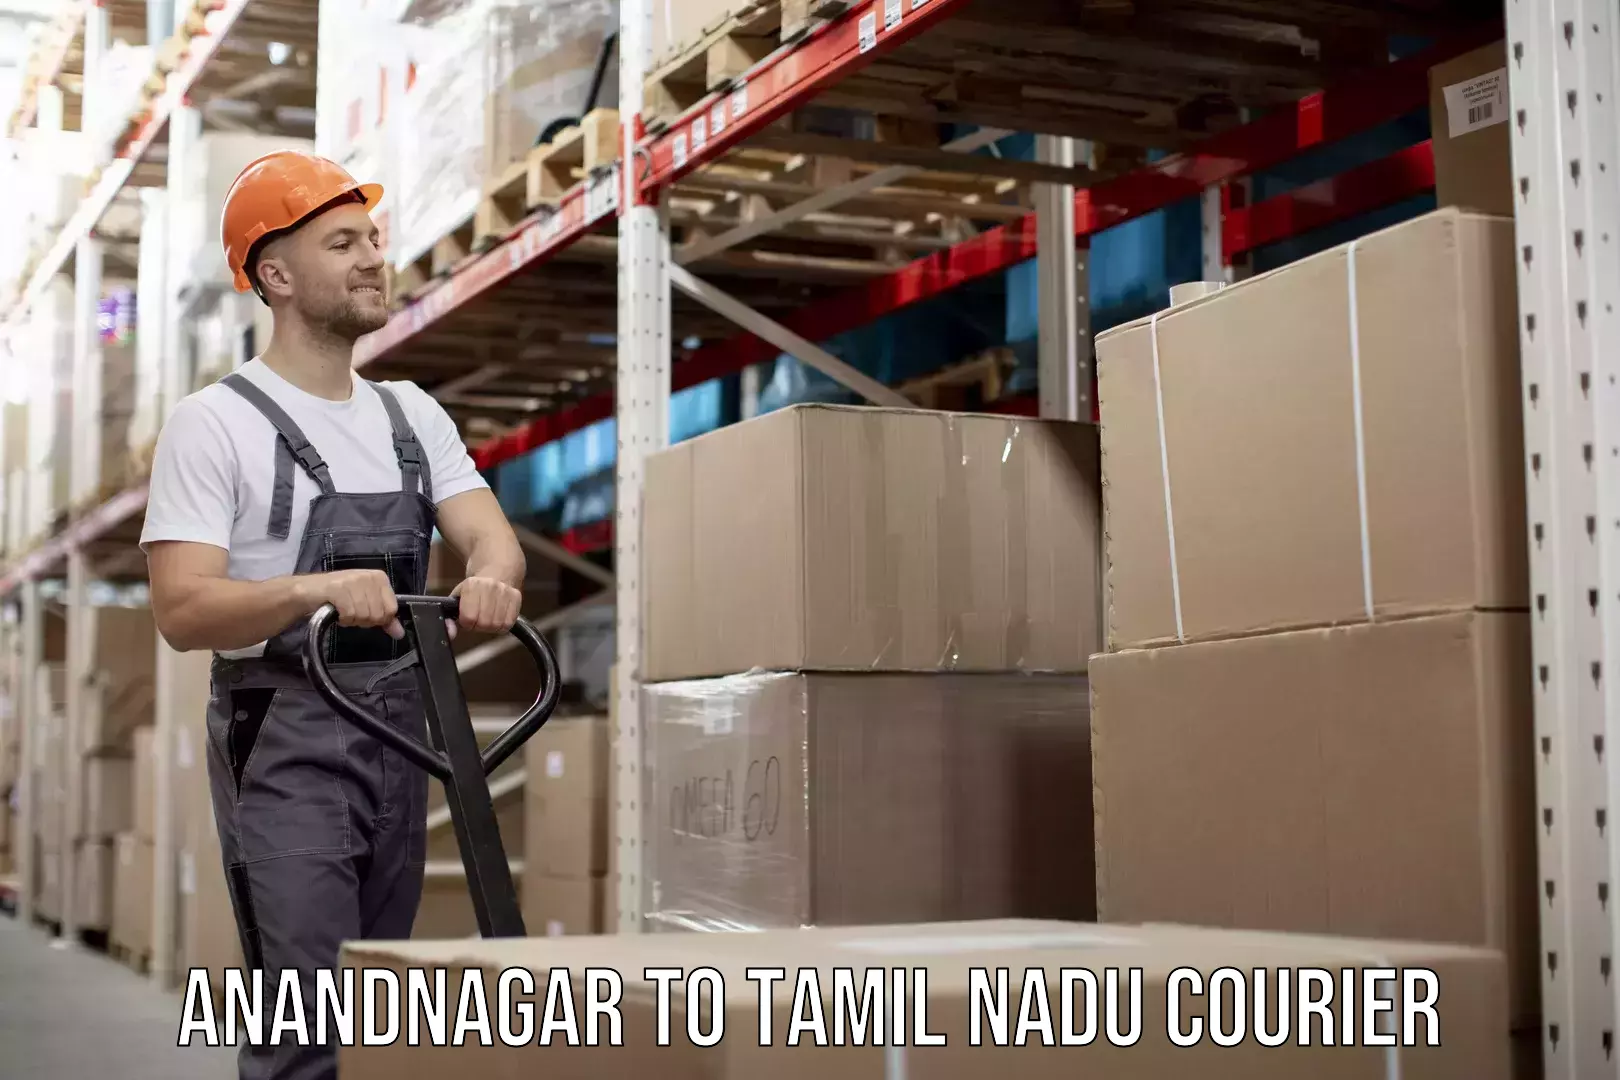 User-friendly delivery service Anandnagar to Tamil Nadu